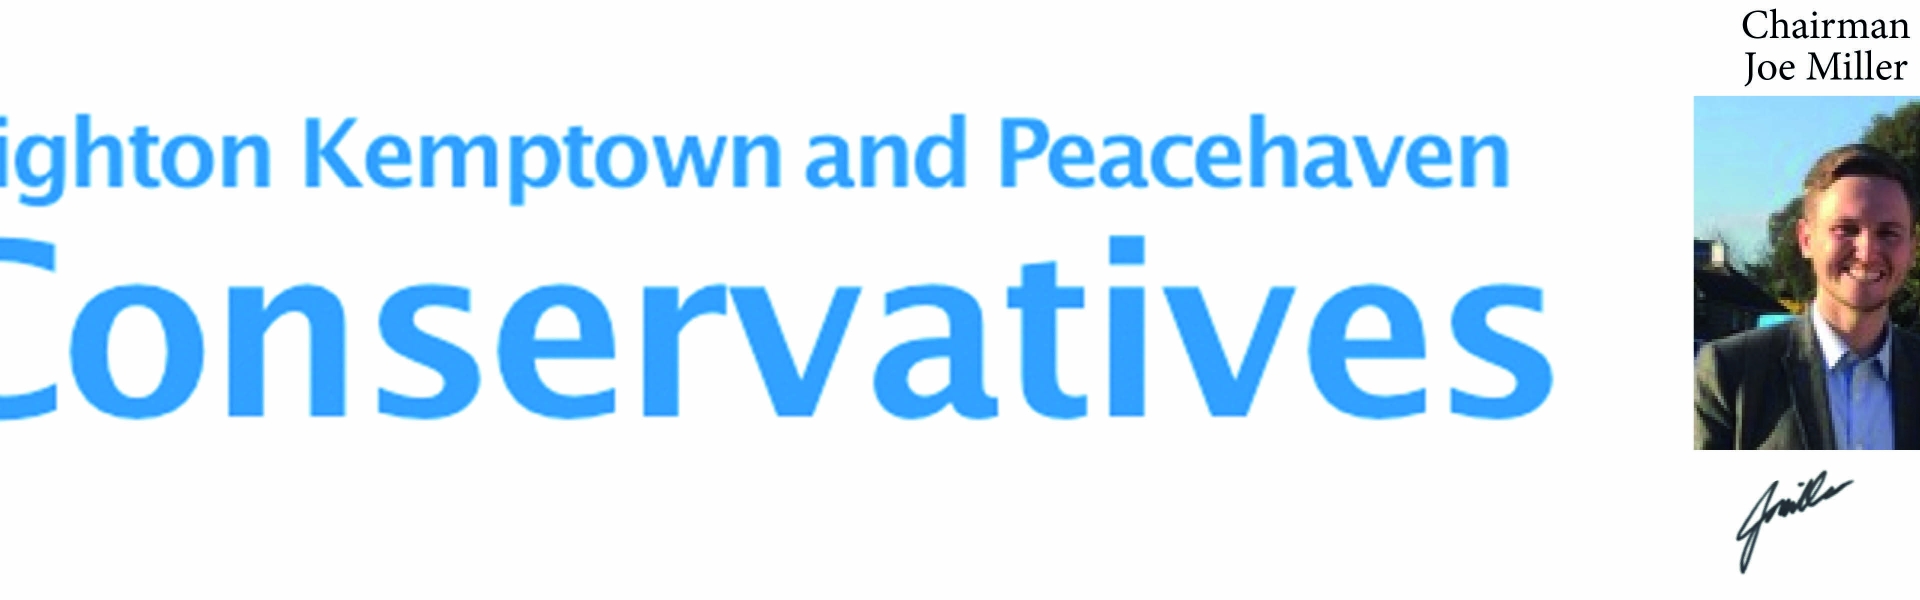 Brighton Kemptown Conservatives